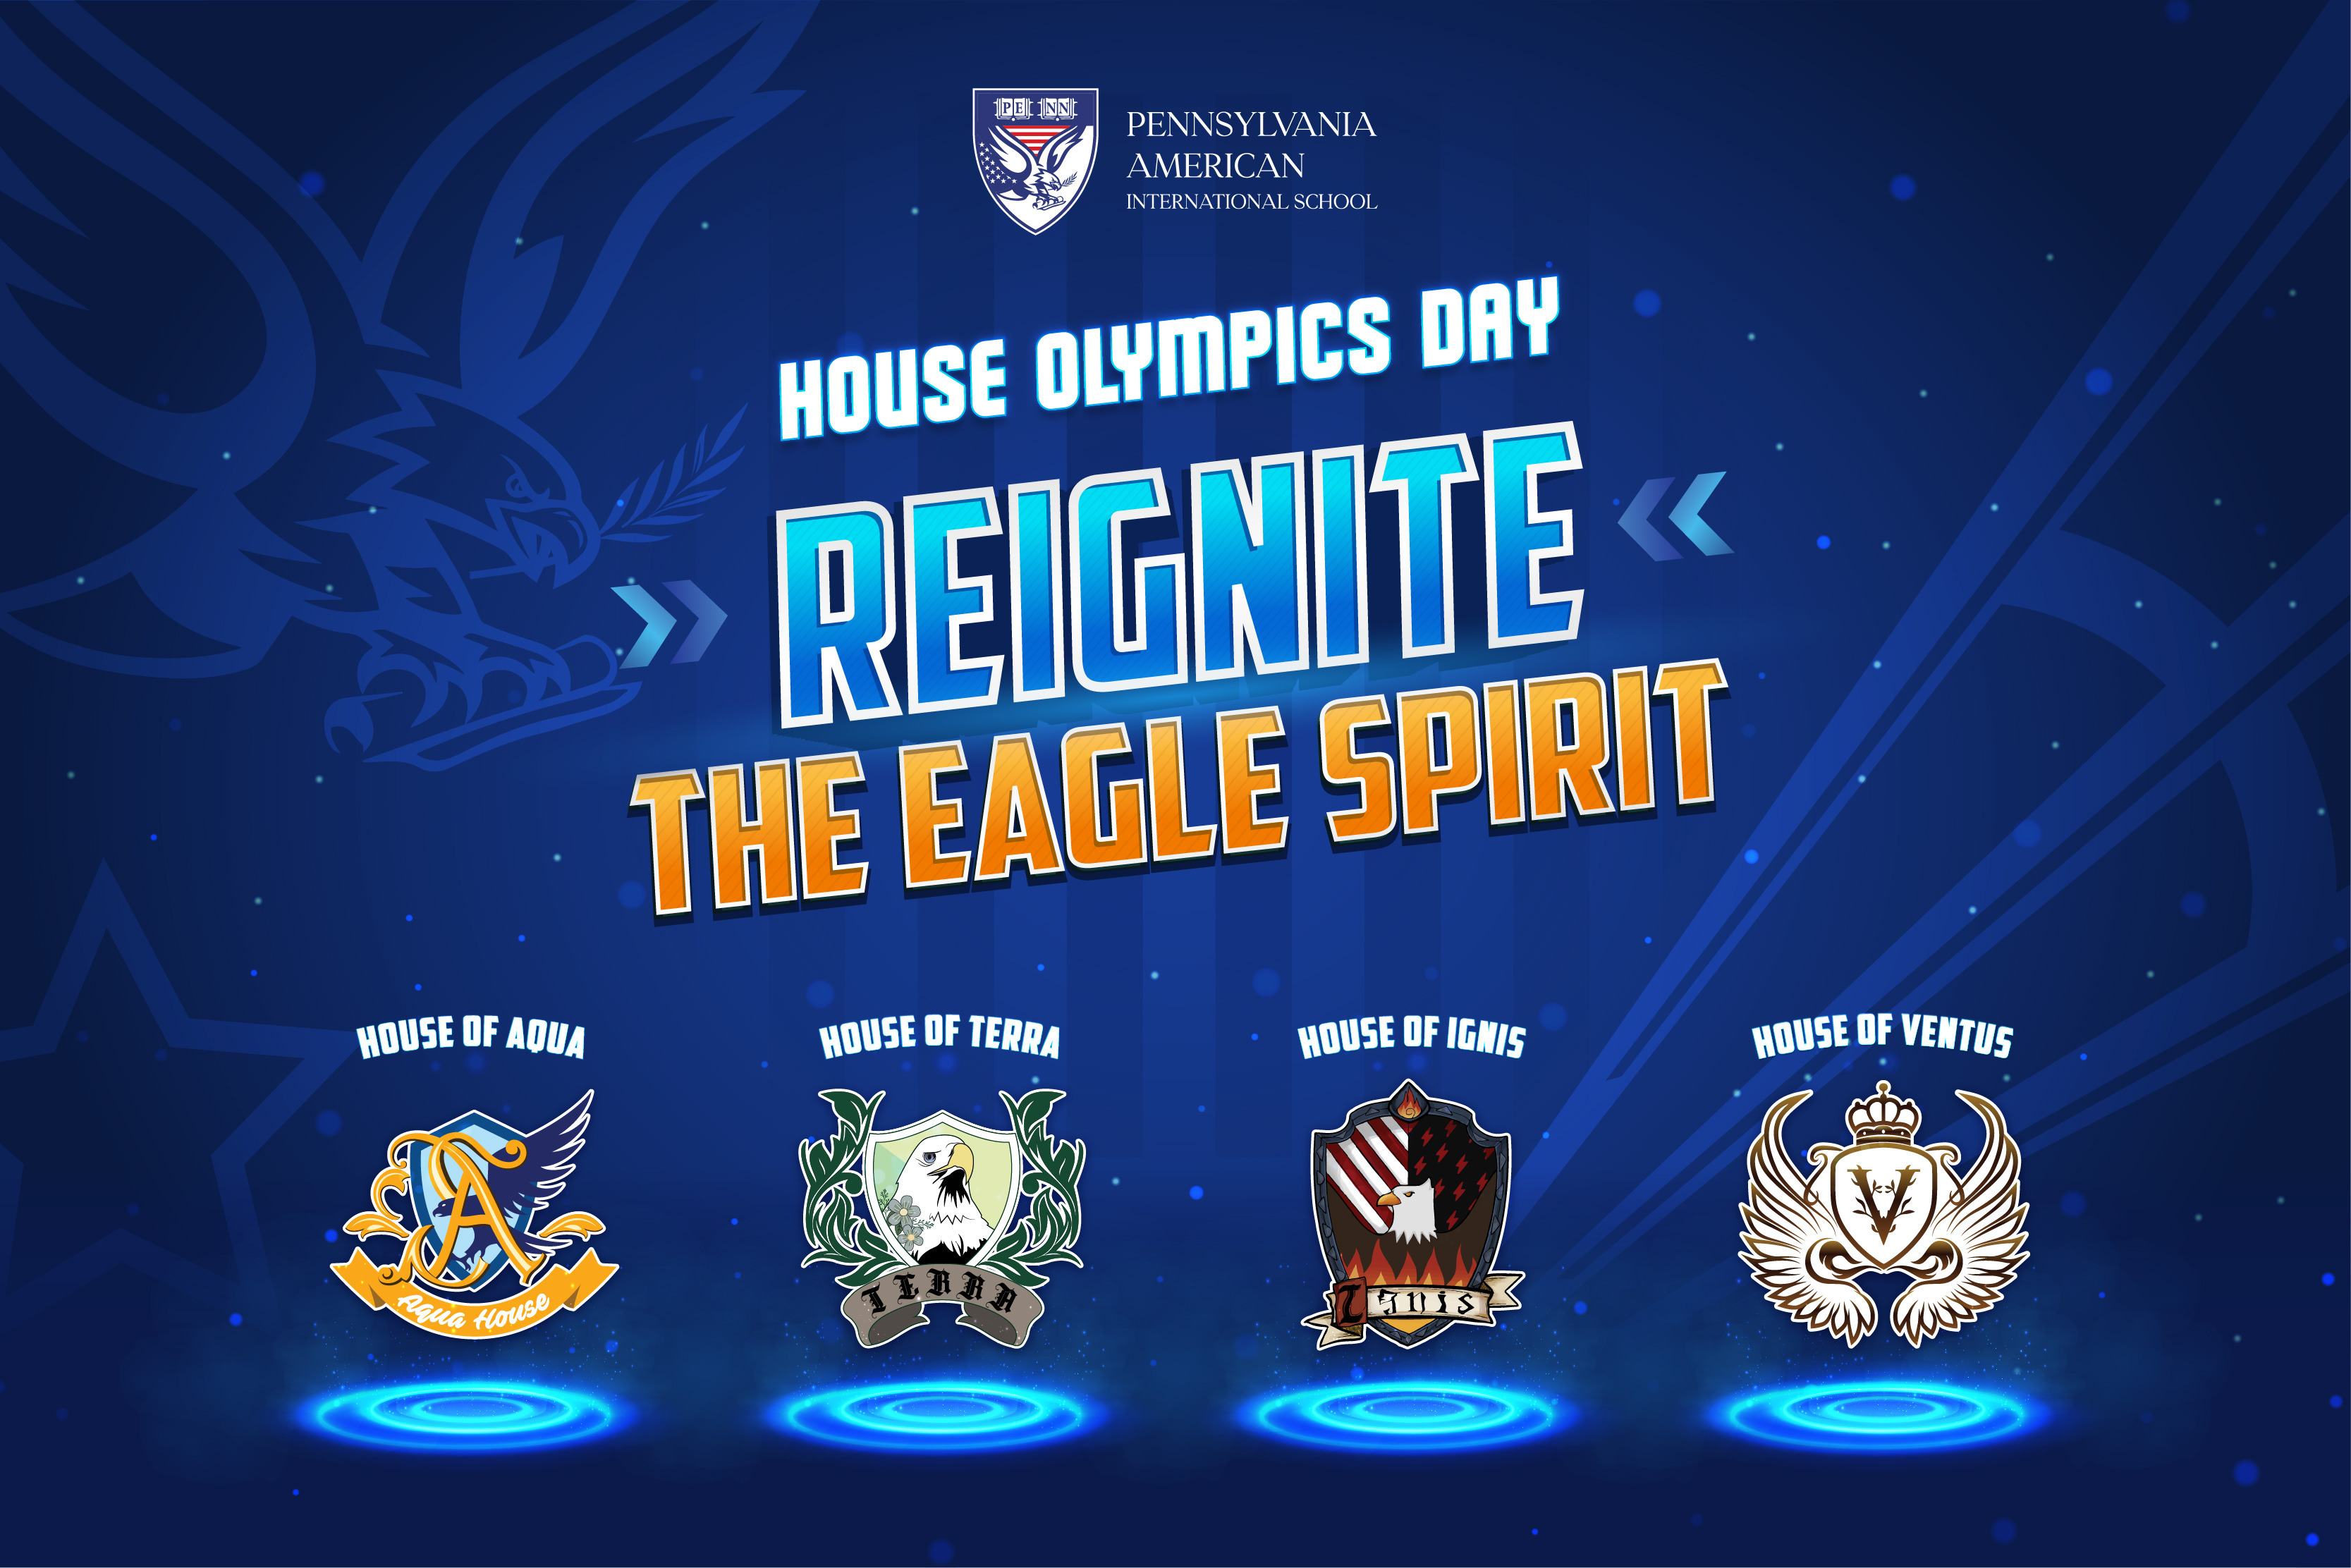 su-kien-house-olympics-day-chu-de-reignite-the-eagle-spirit